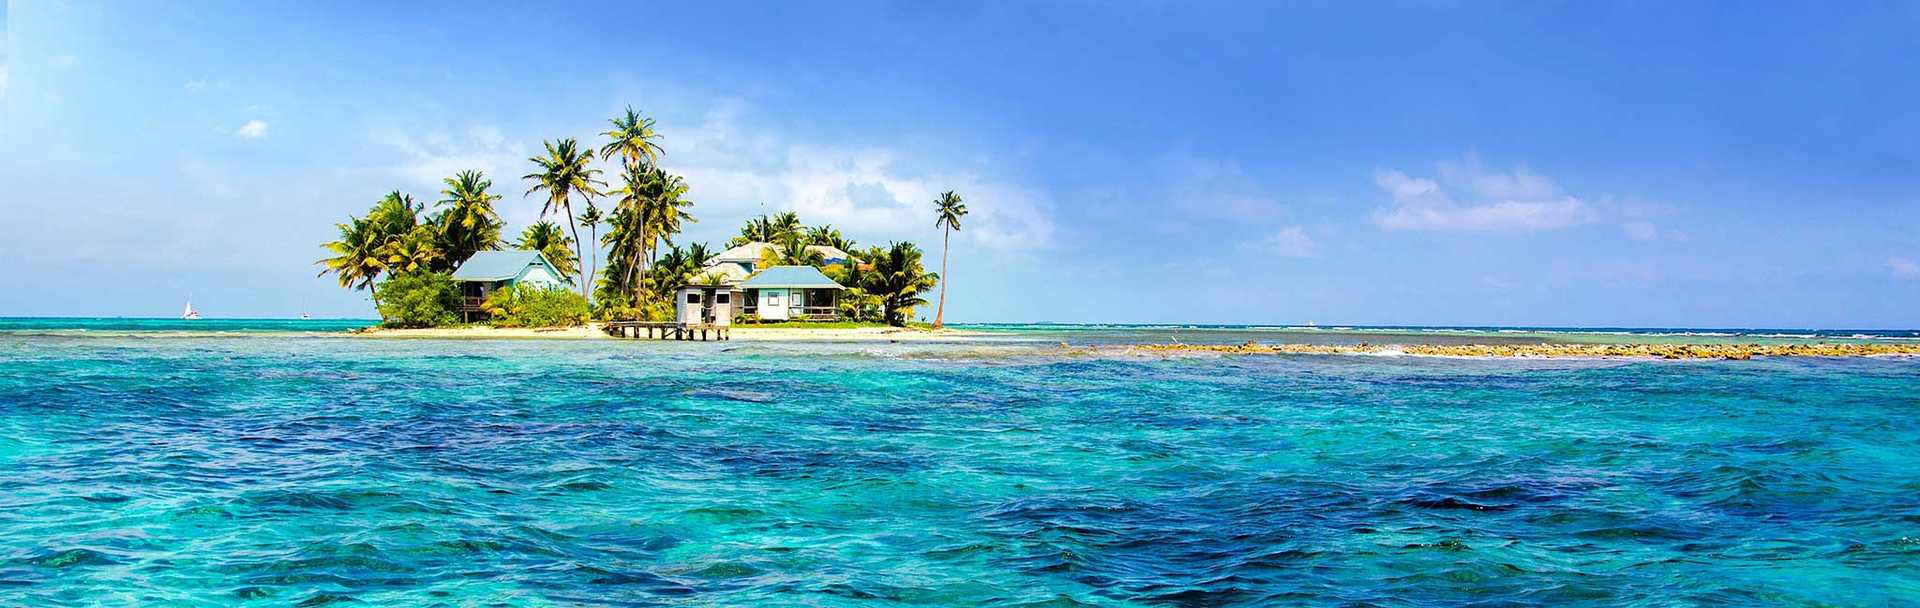 Belize Tour - Tranquil Beach